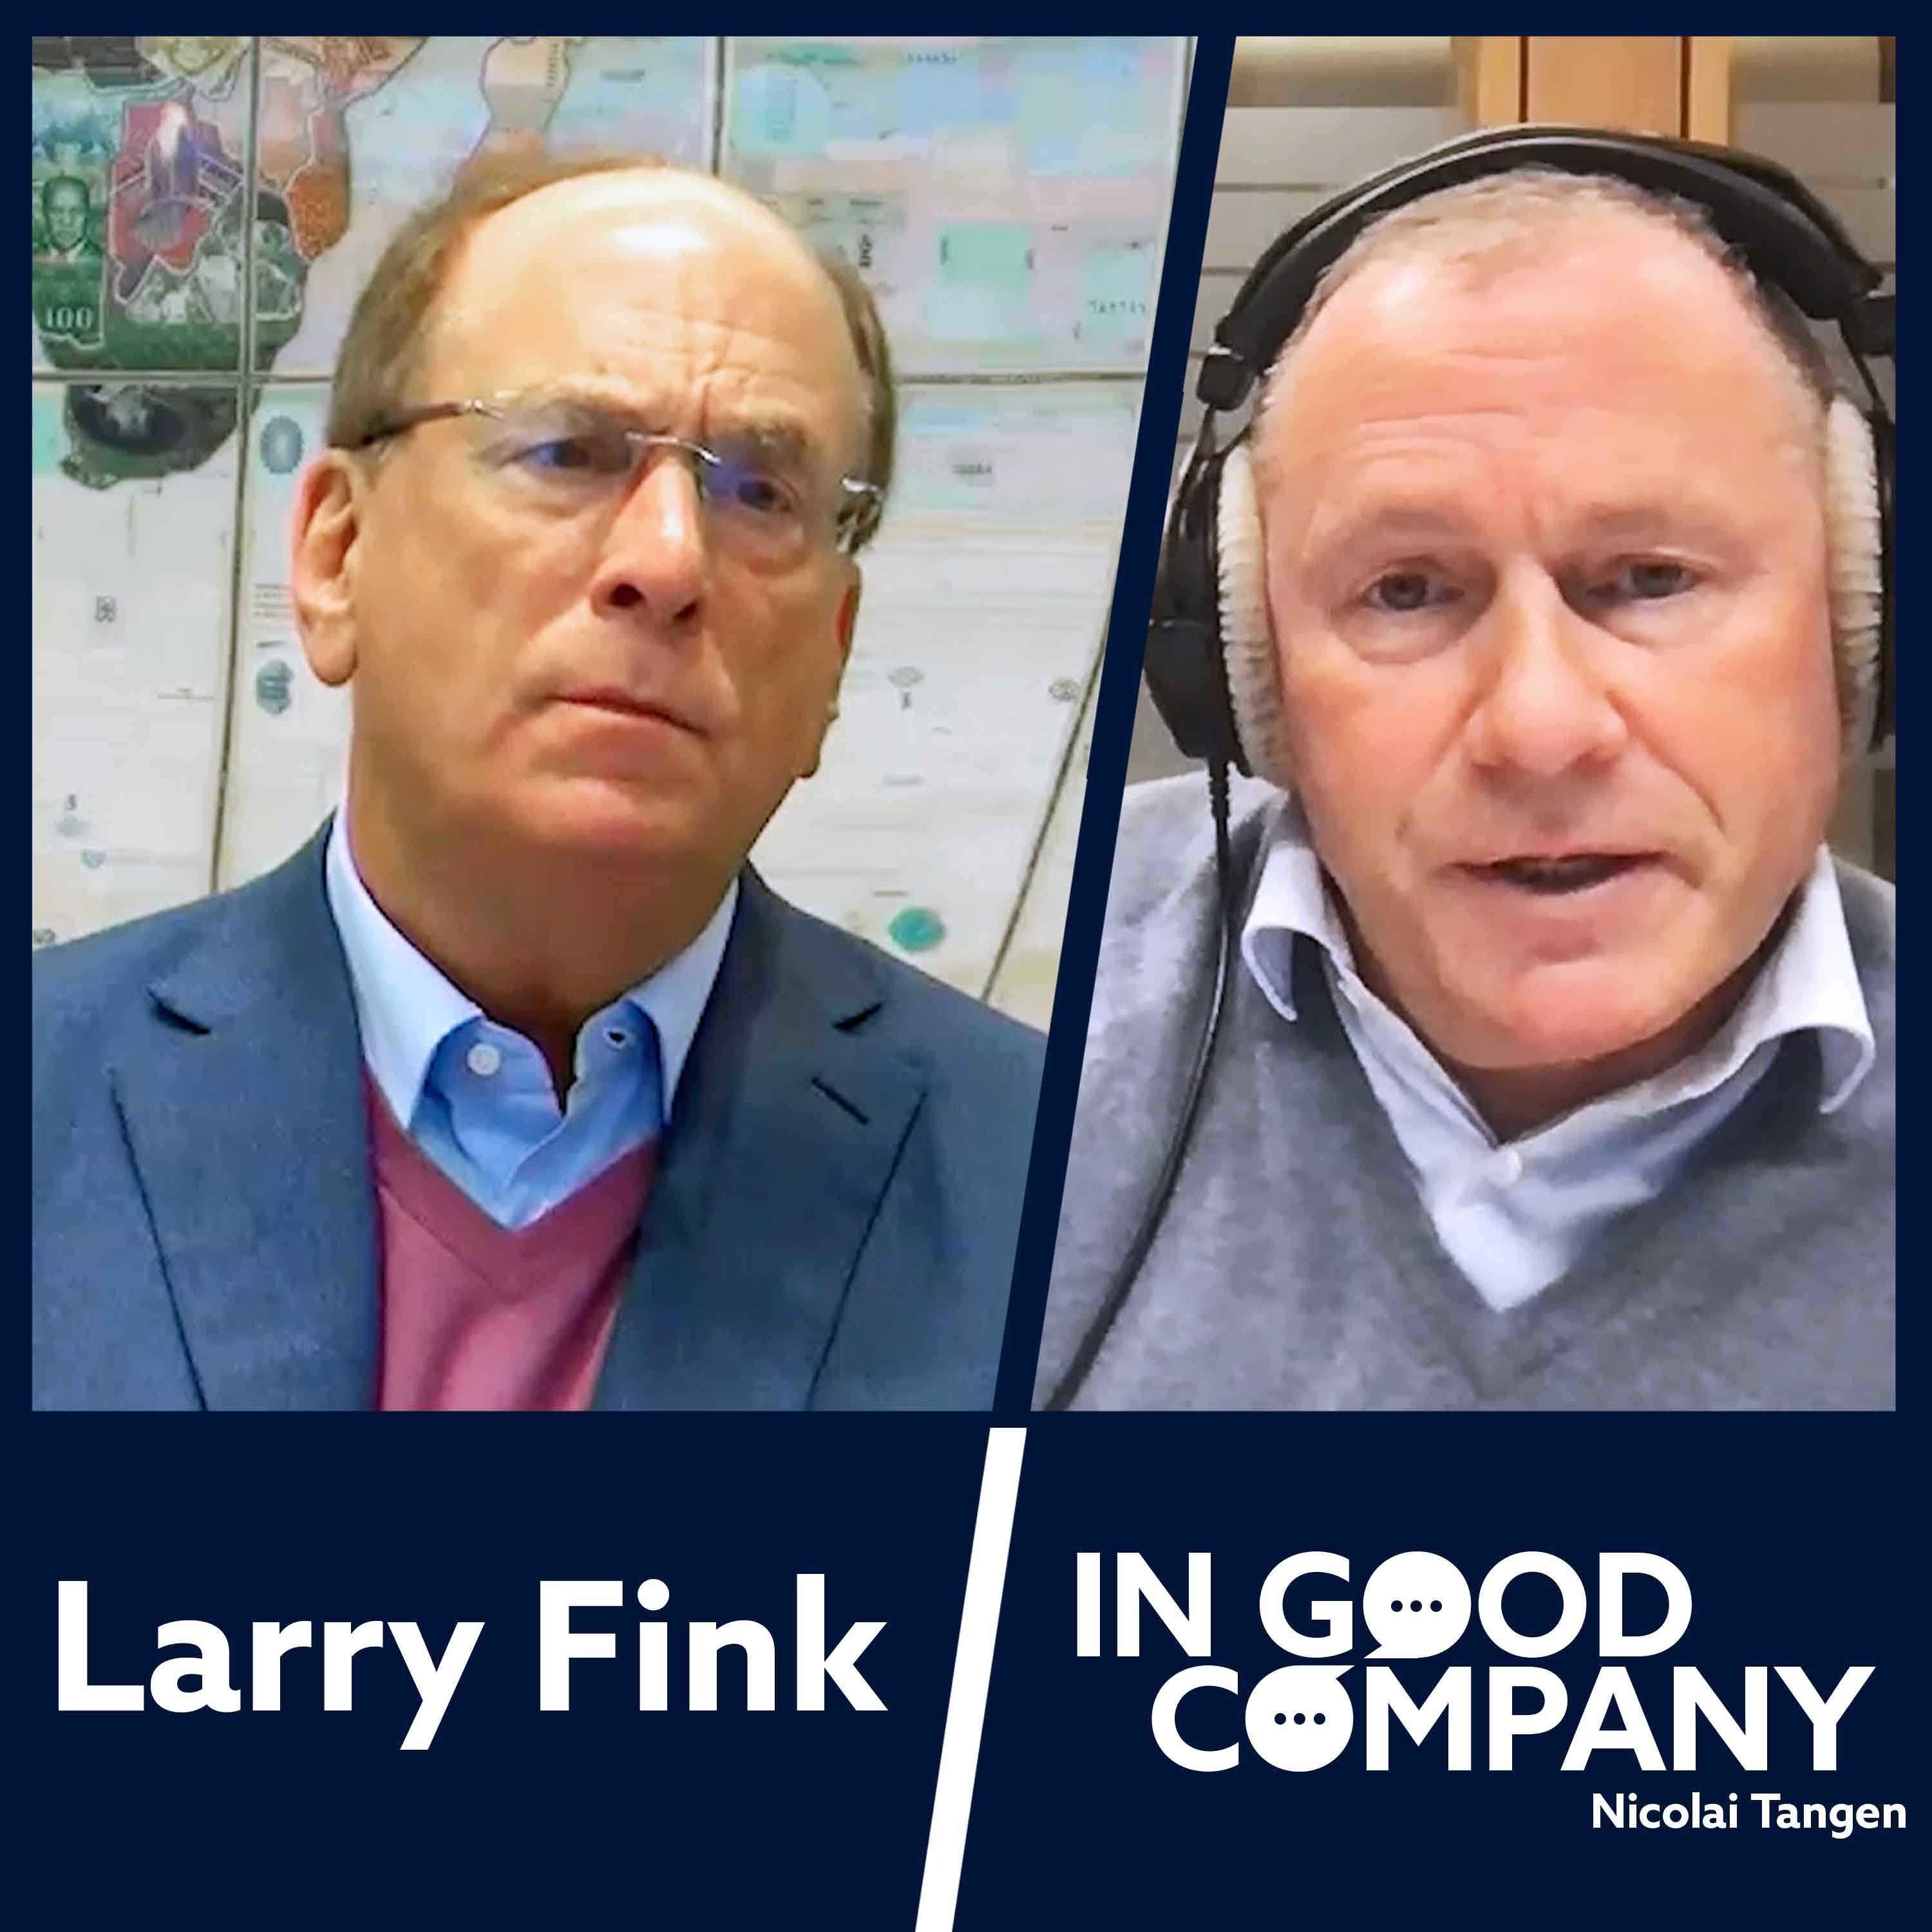 Larry Fink CEO of BlackRock by Norges Bank Investment Management